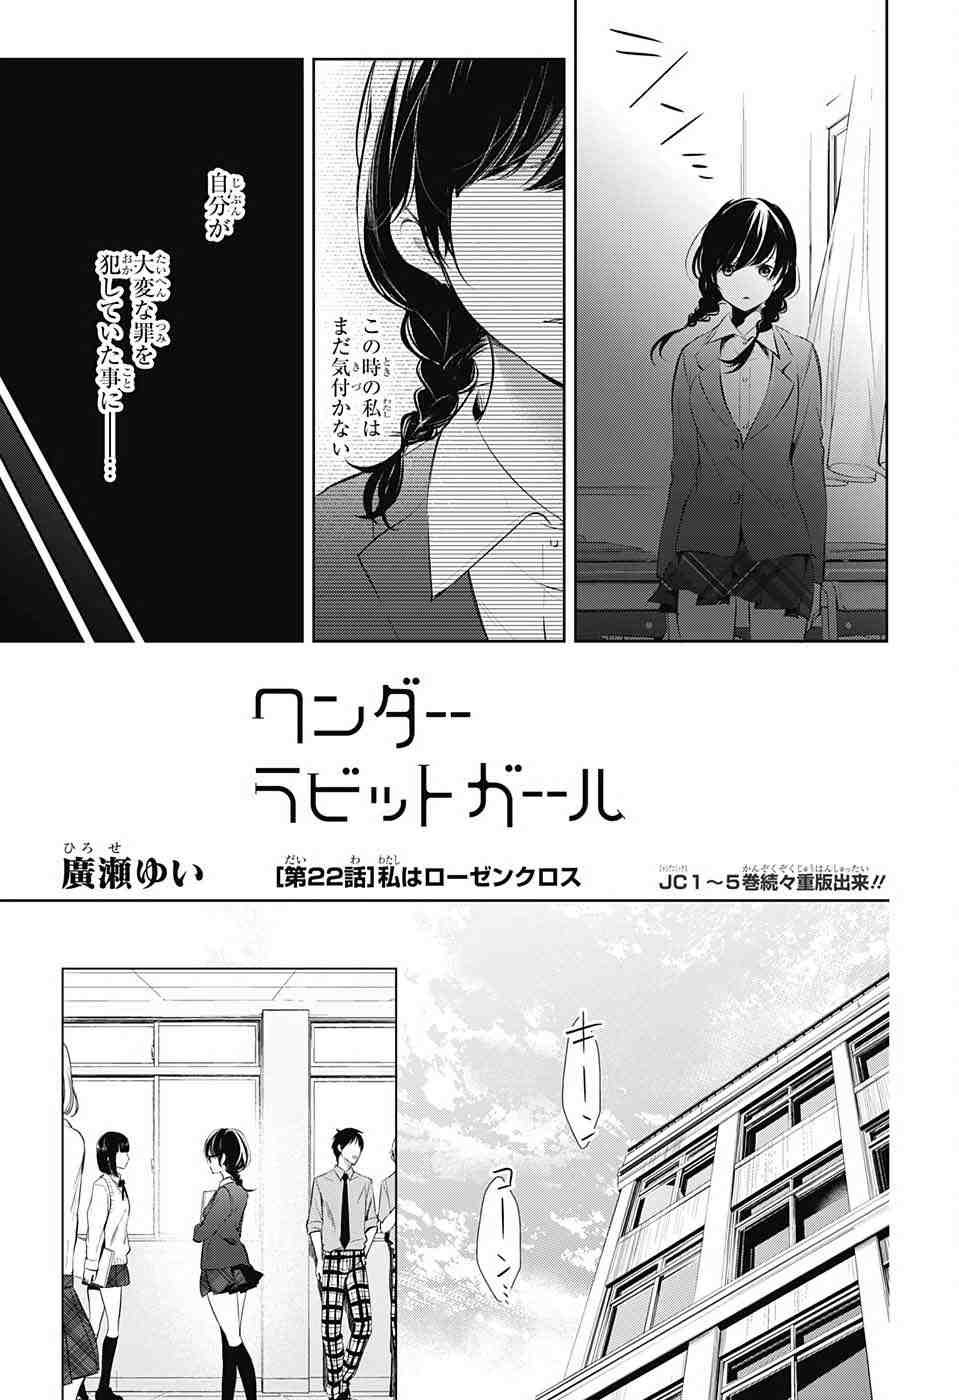 Wonder Rabbit Girl - ワンダーラビットガール - Chapter 22 - Page 3